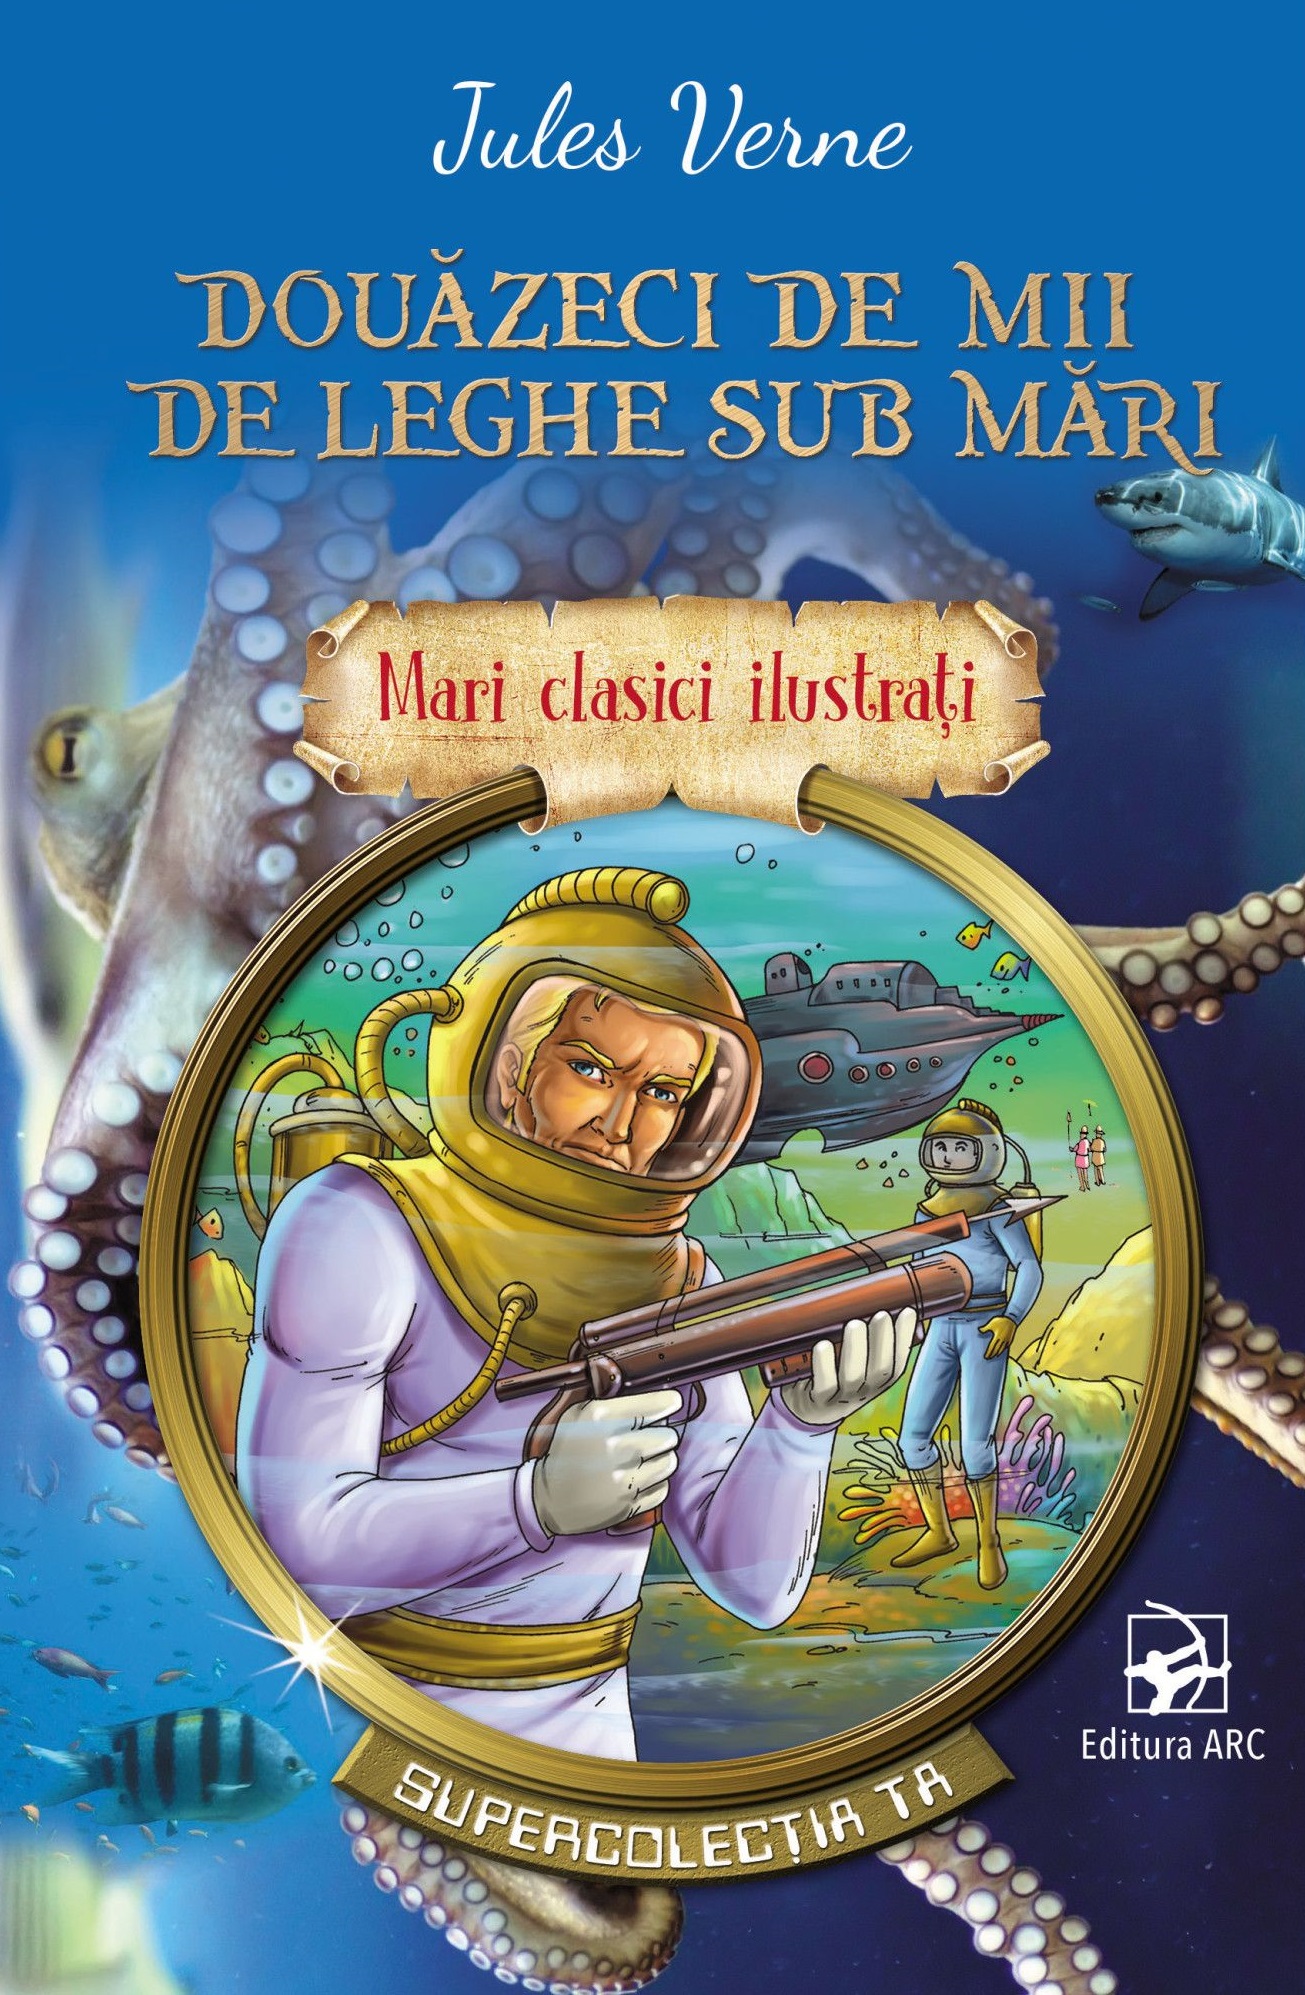 Douazeci de leghe sub mari | Jules Verne ARC Bibliografie scolara